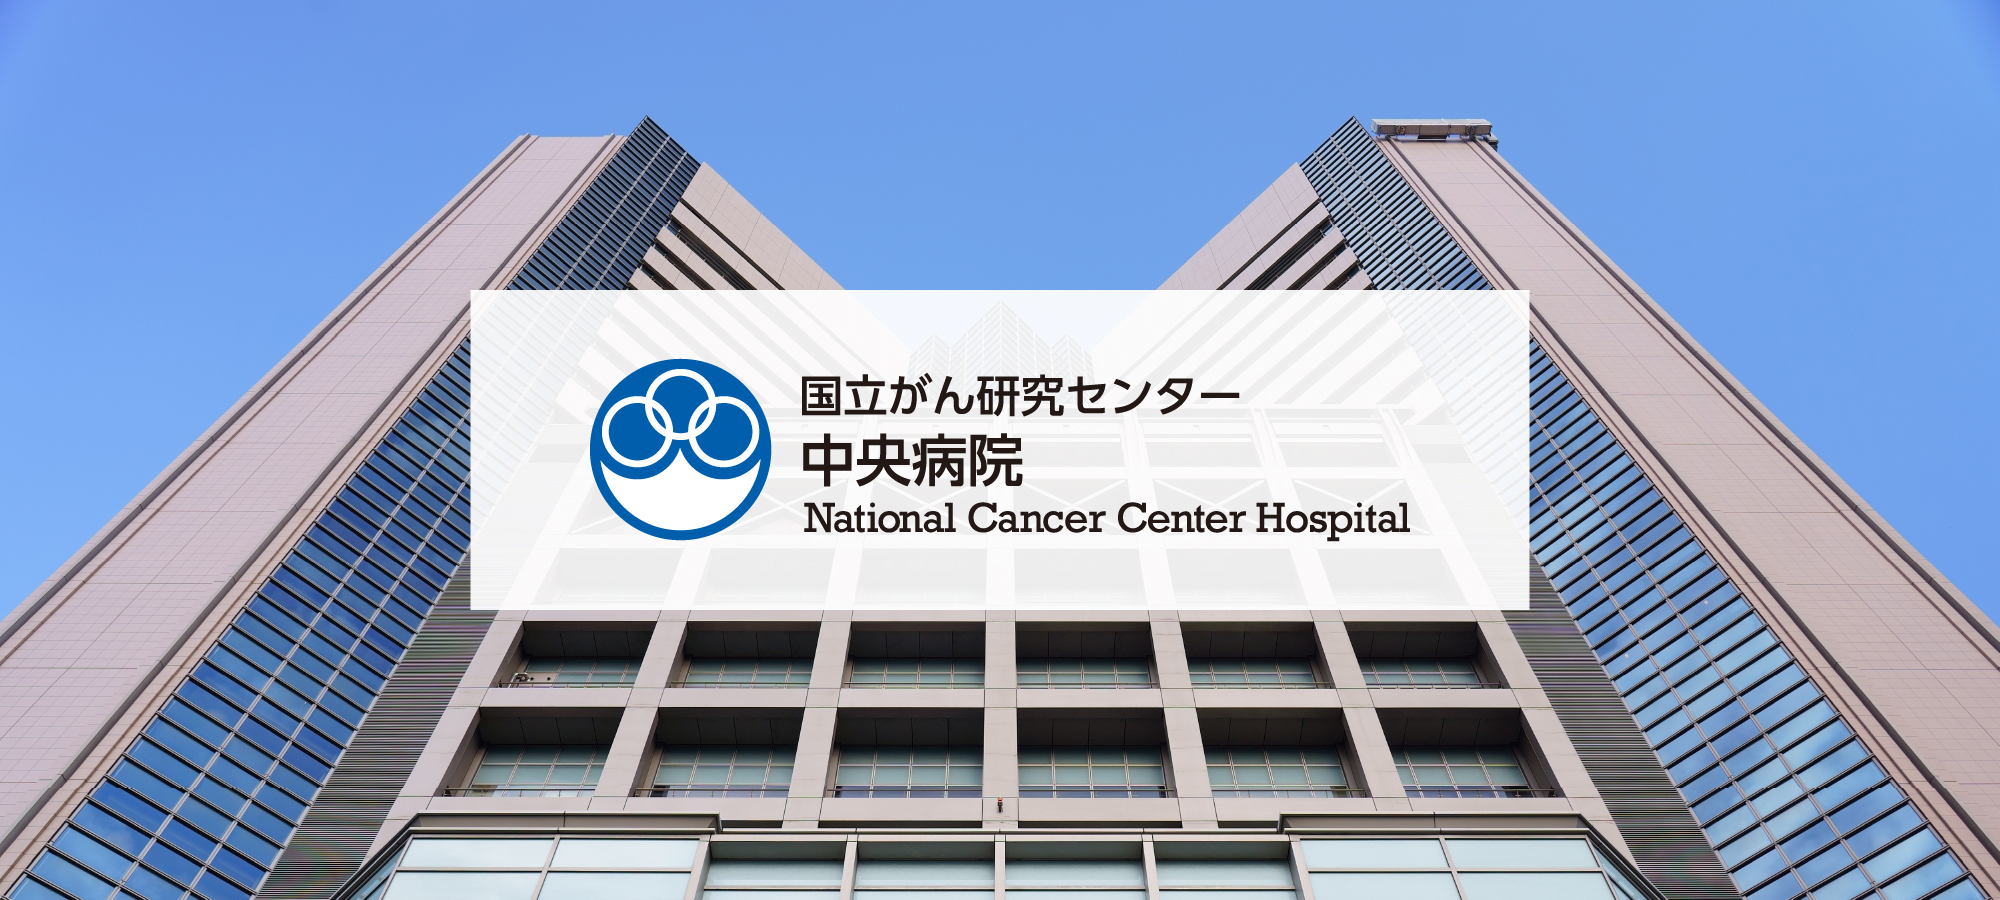 National Cancer Center Hospital